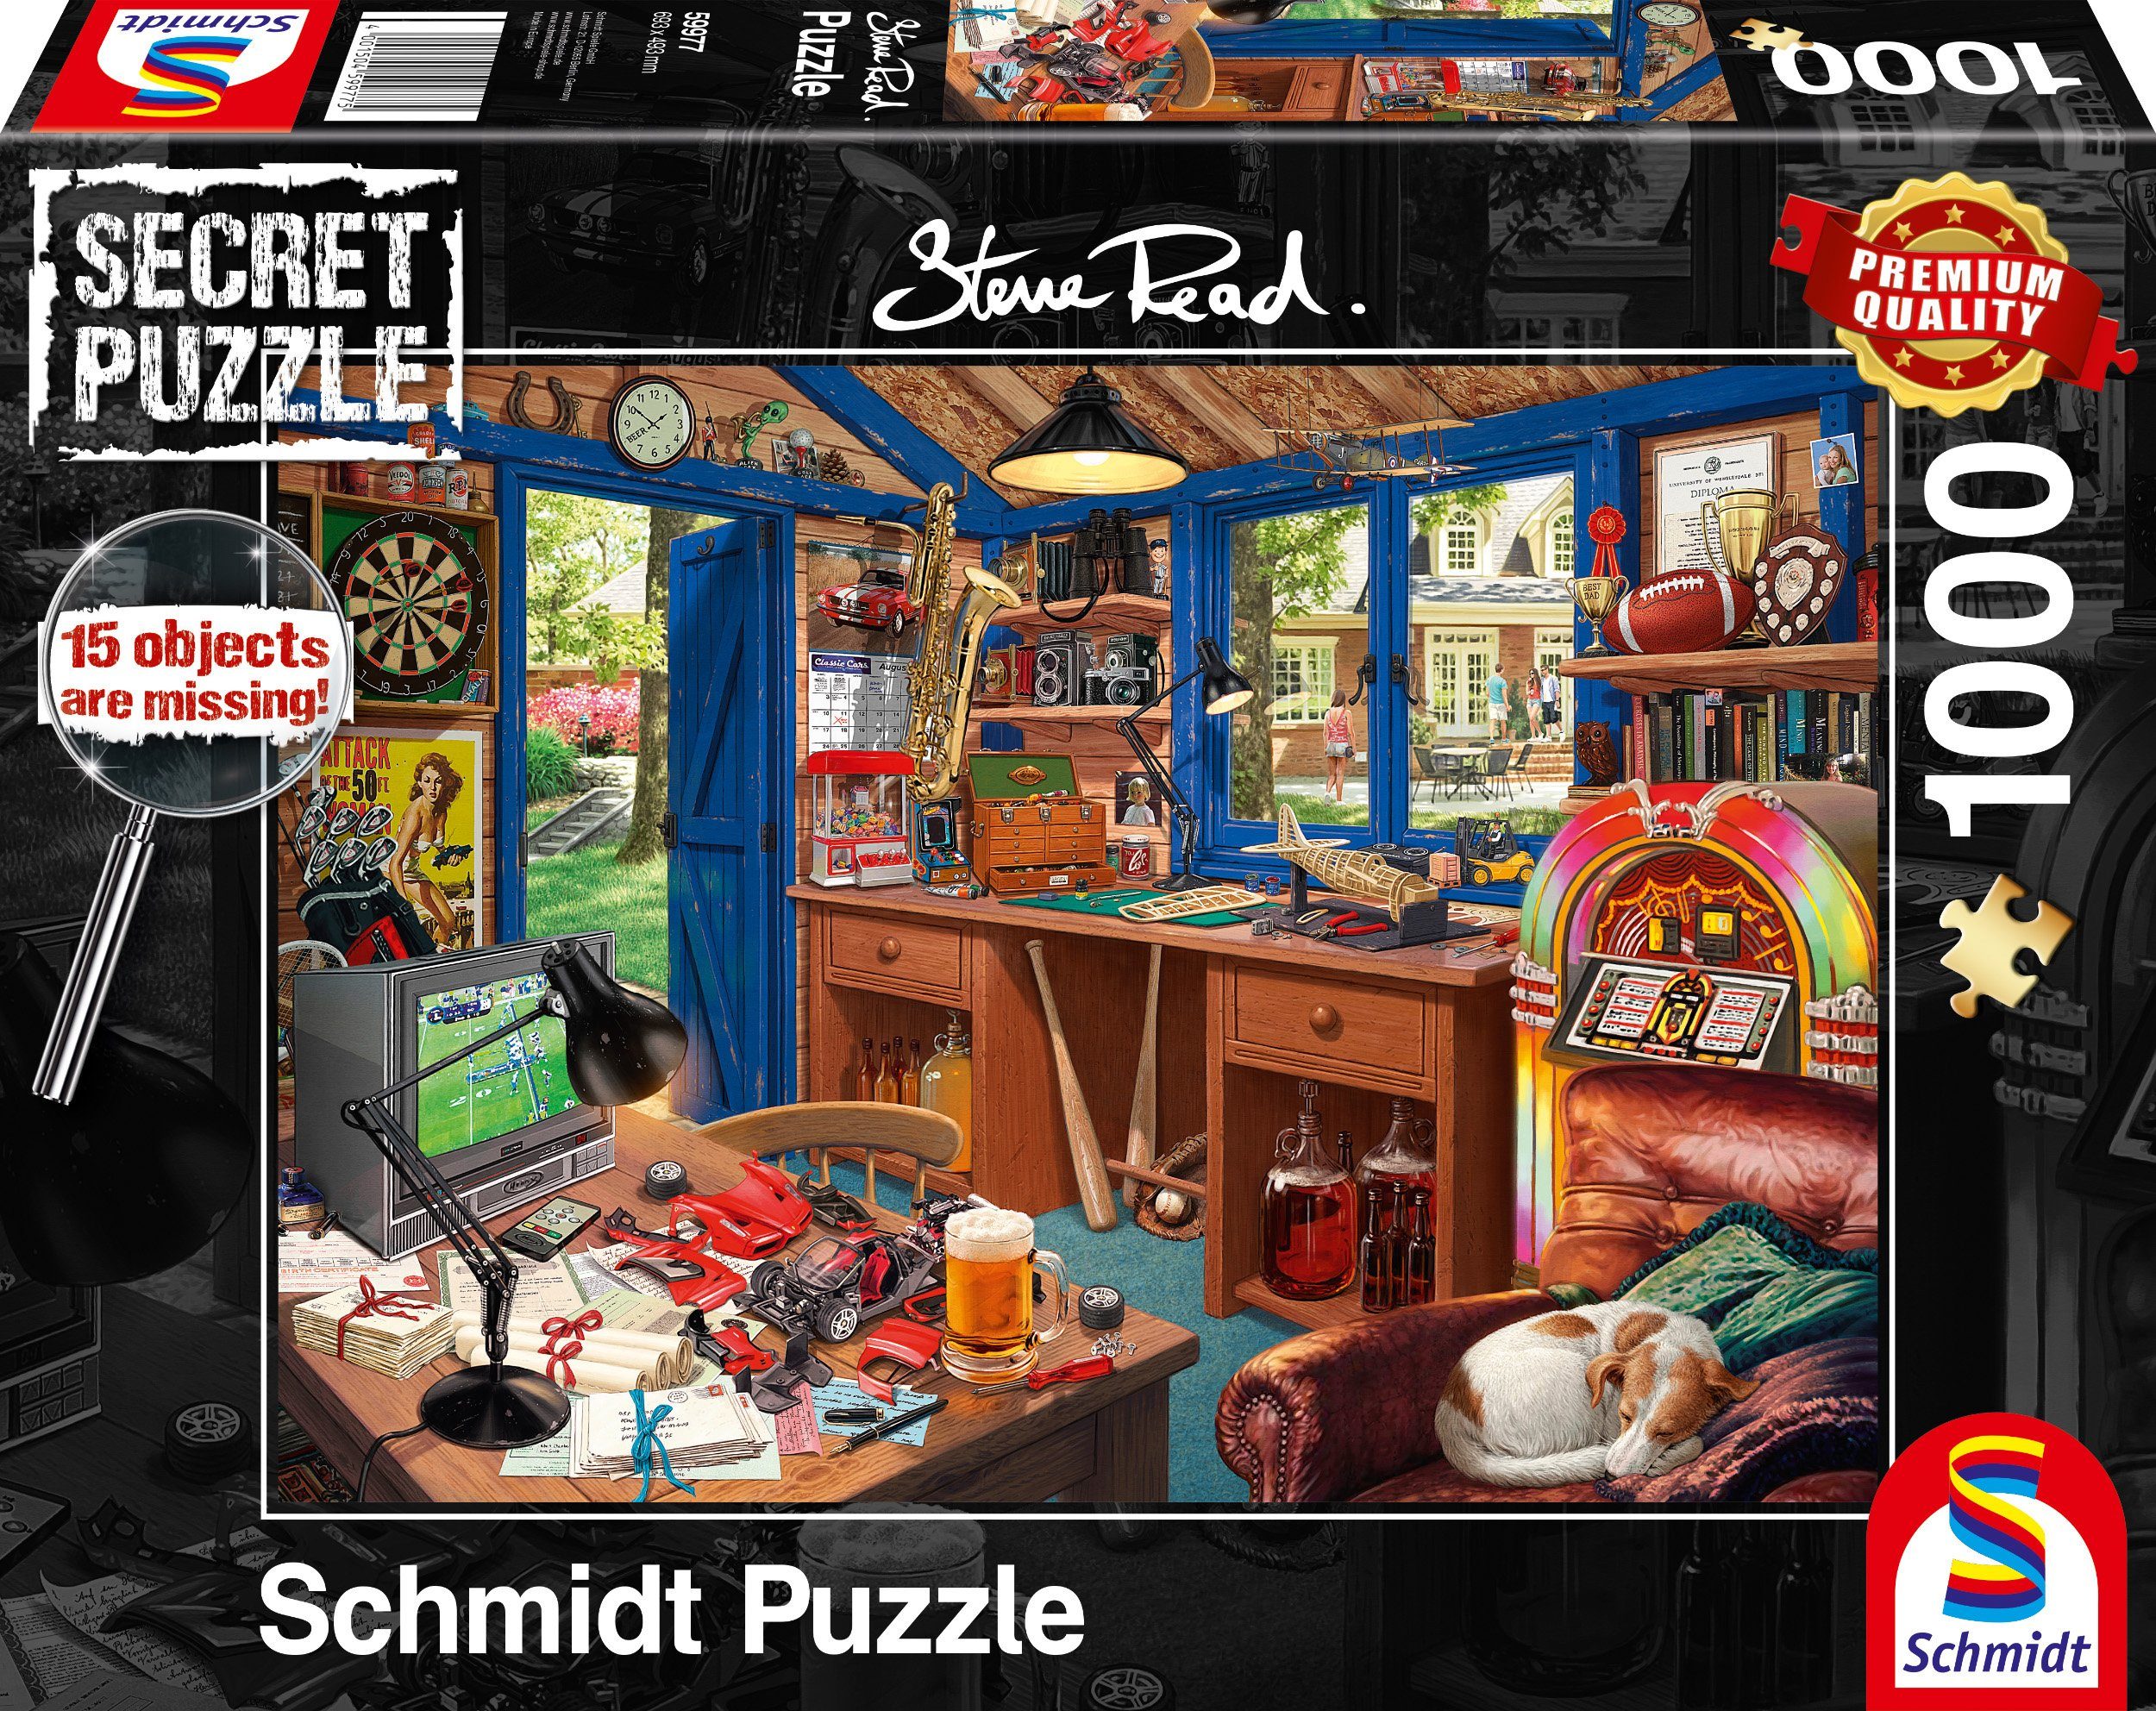 Schmidt Spiele Puzzle Secret Puzzle, Vaters Werkstatt, 1000 Puzzleteile, Made in Europe